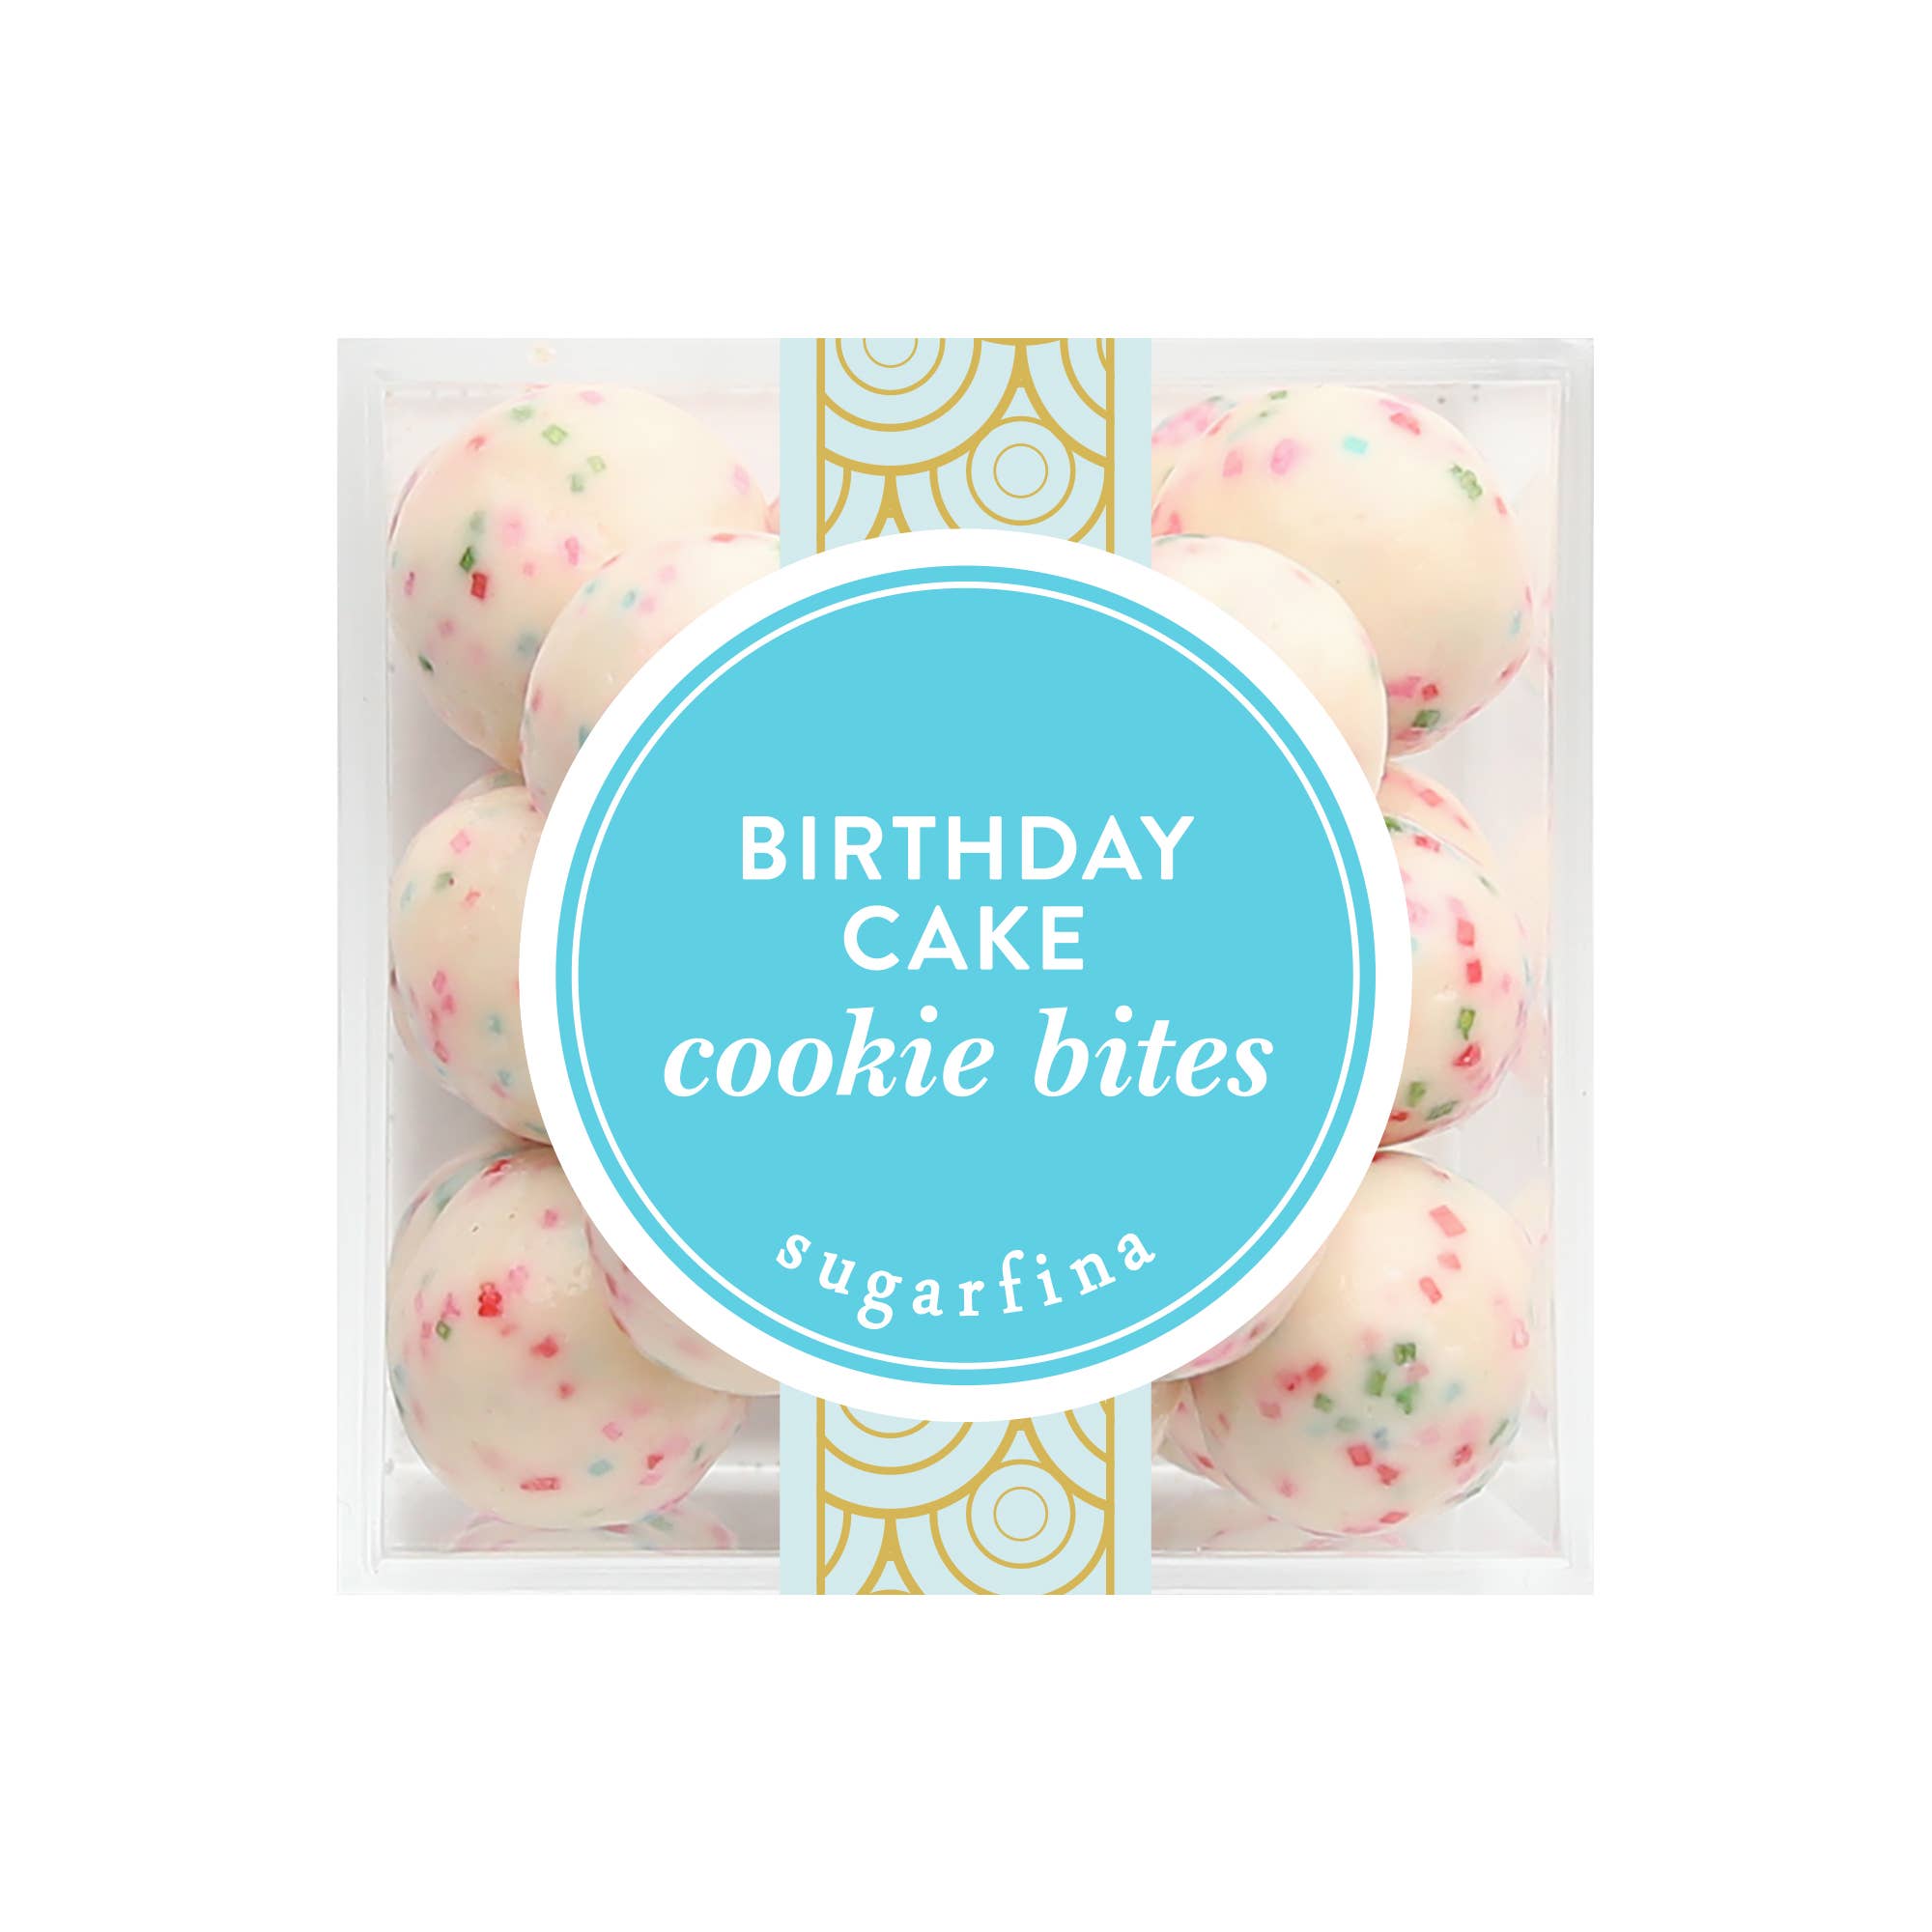 Birthday Cake Cookie Bites - Small-Food-Sugarfina-So & Sew Boutique